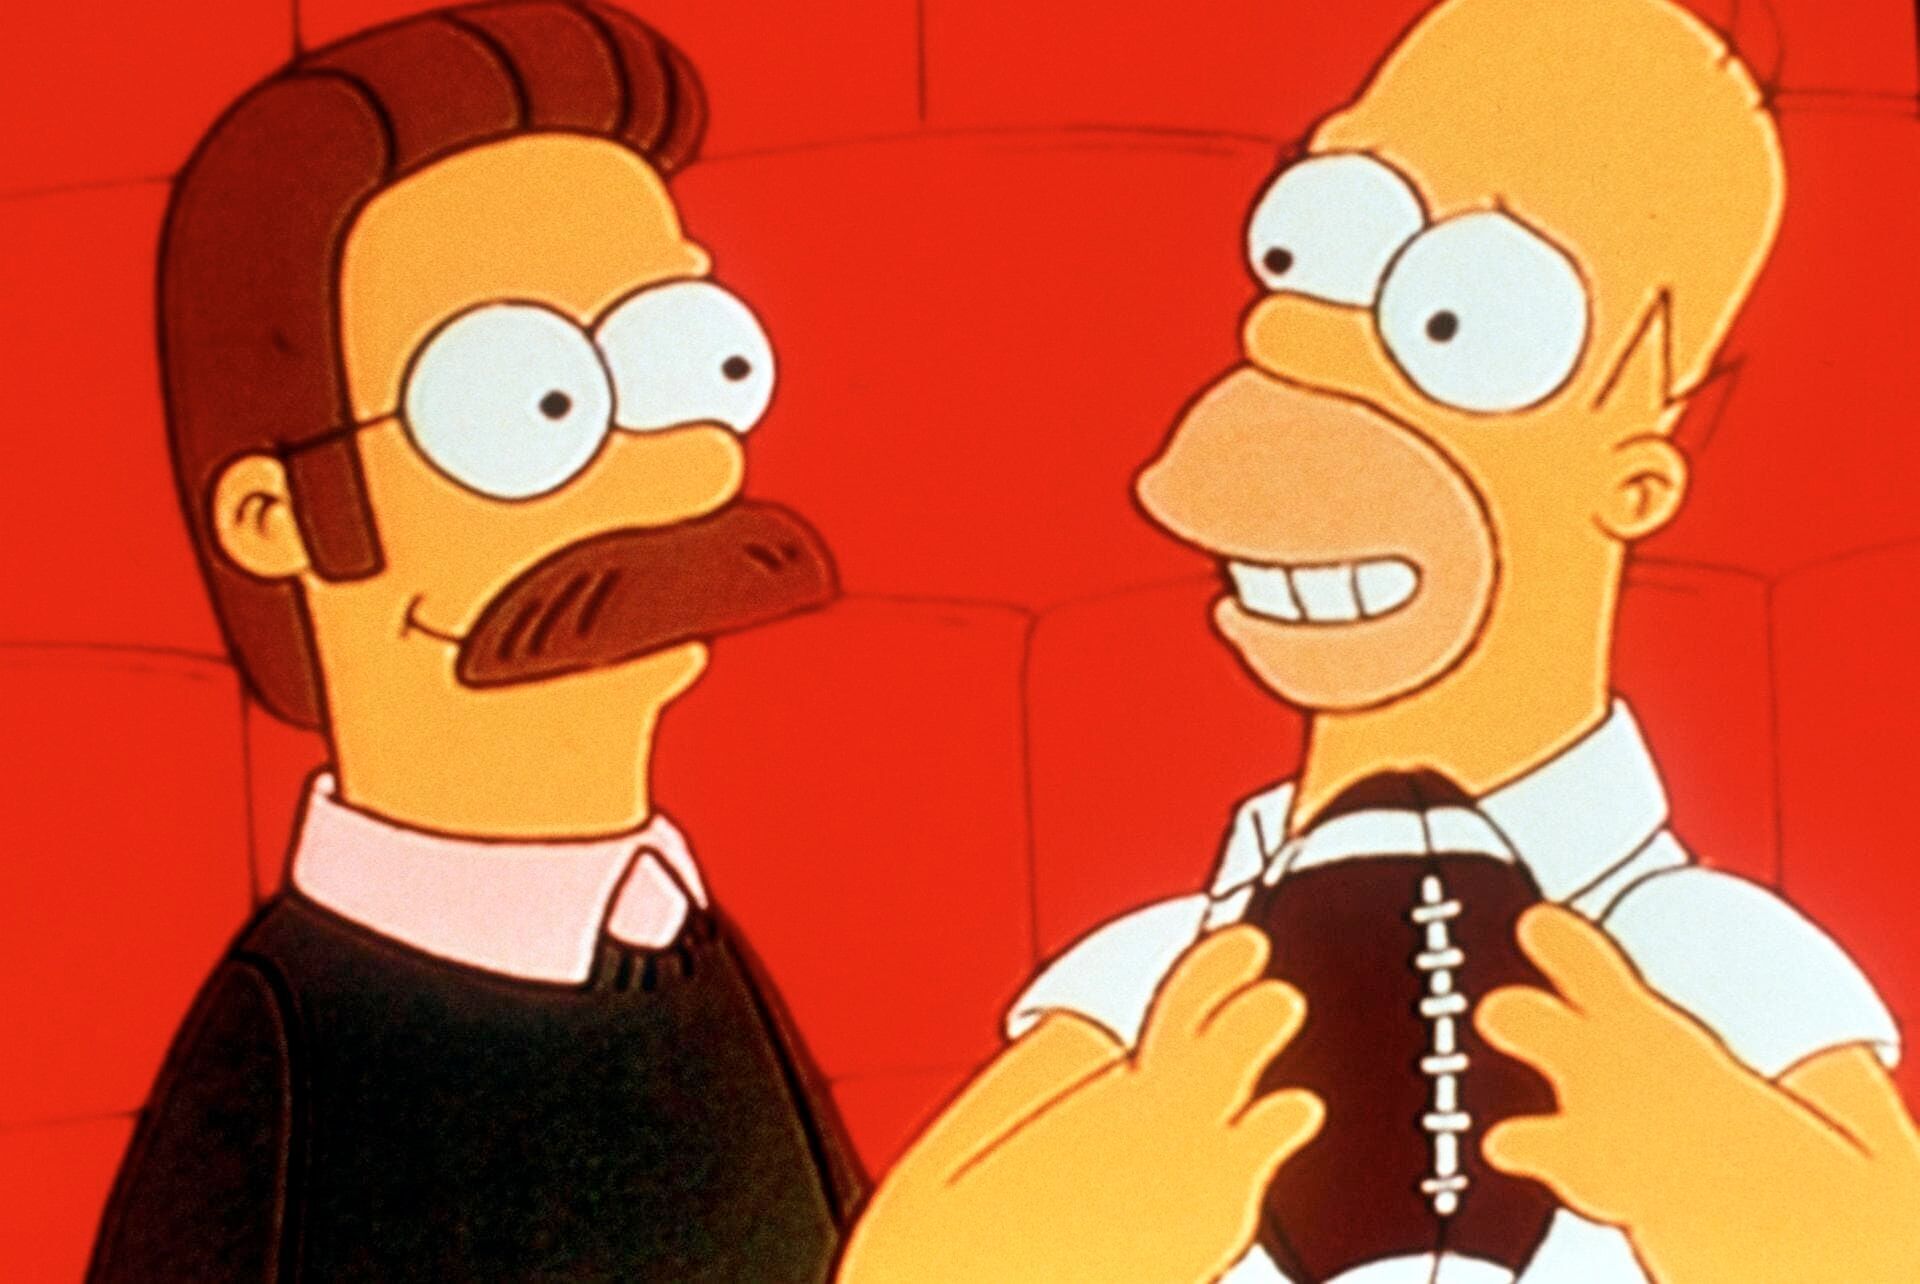 Les Simpson - Homer aime Flanders